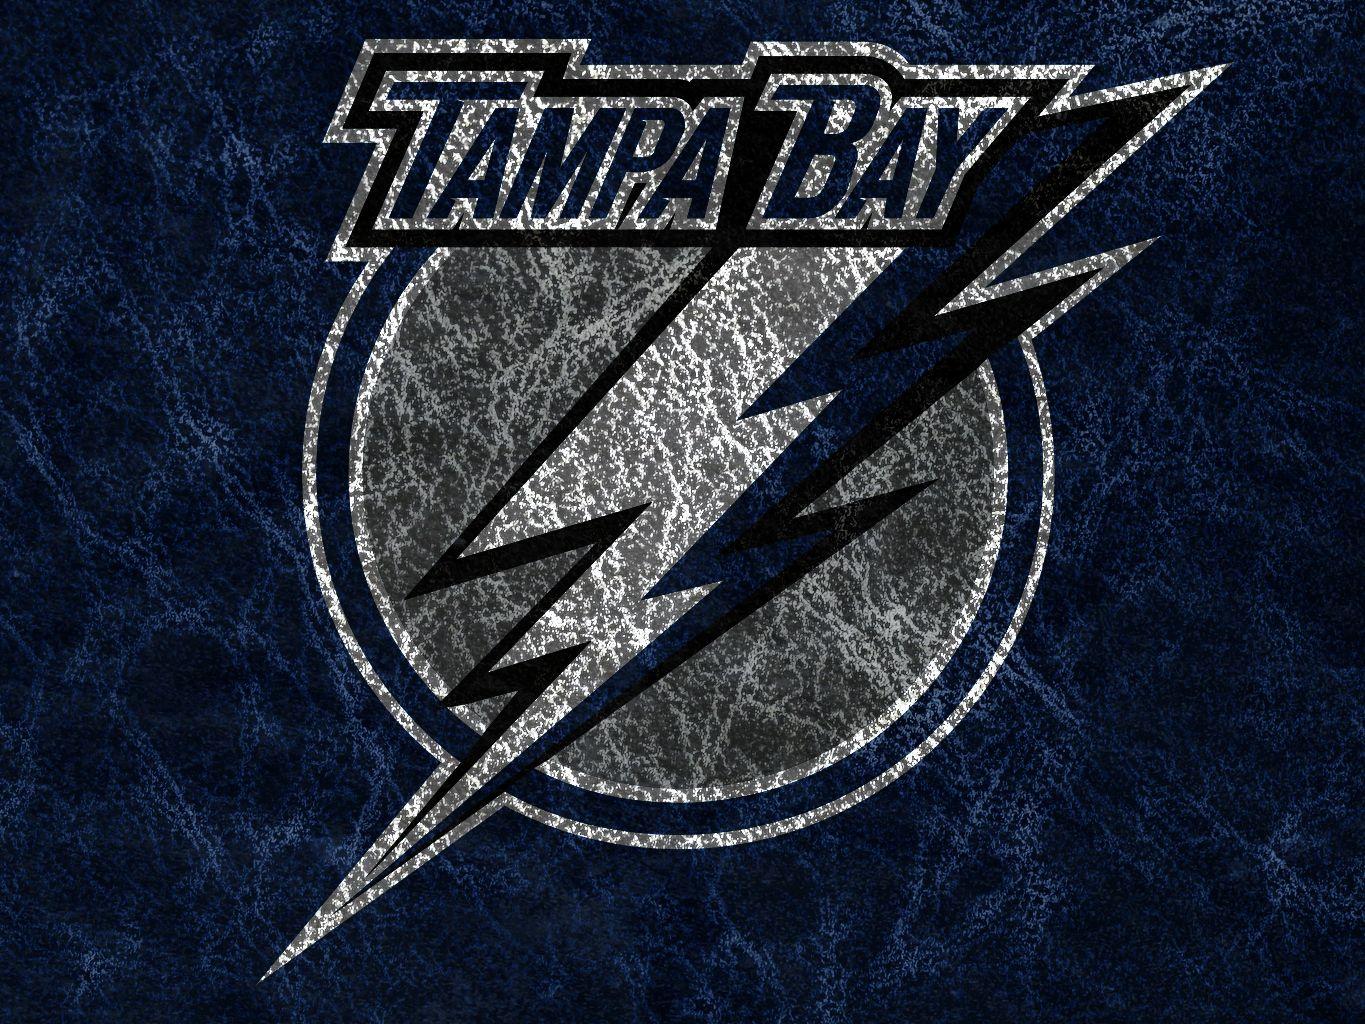 2023 Tampa Bay Lightning wallpaper – Pro Sports Backgrounds